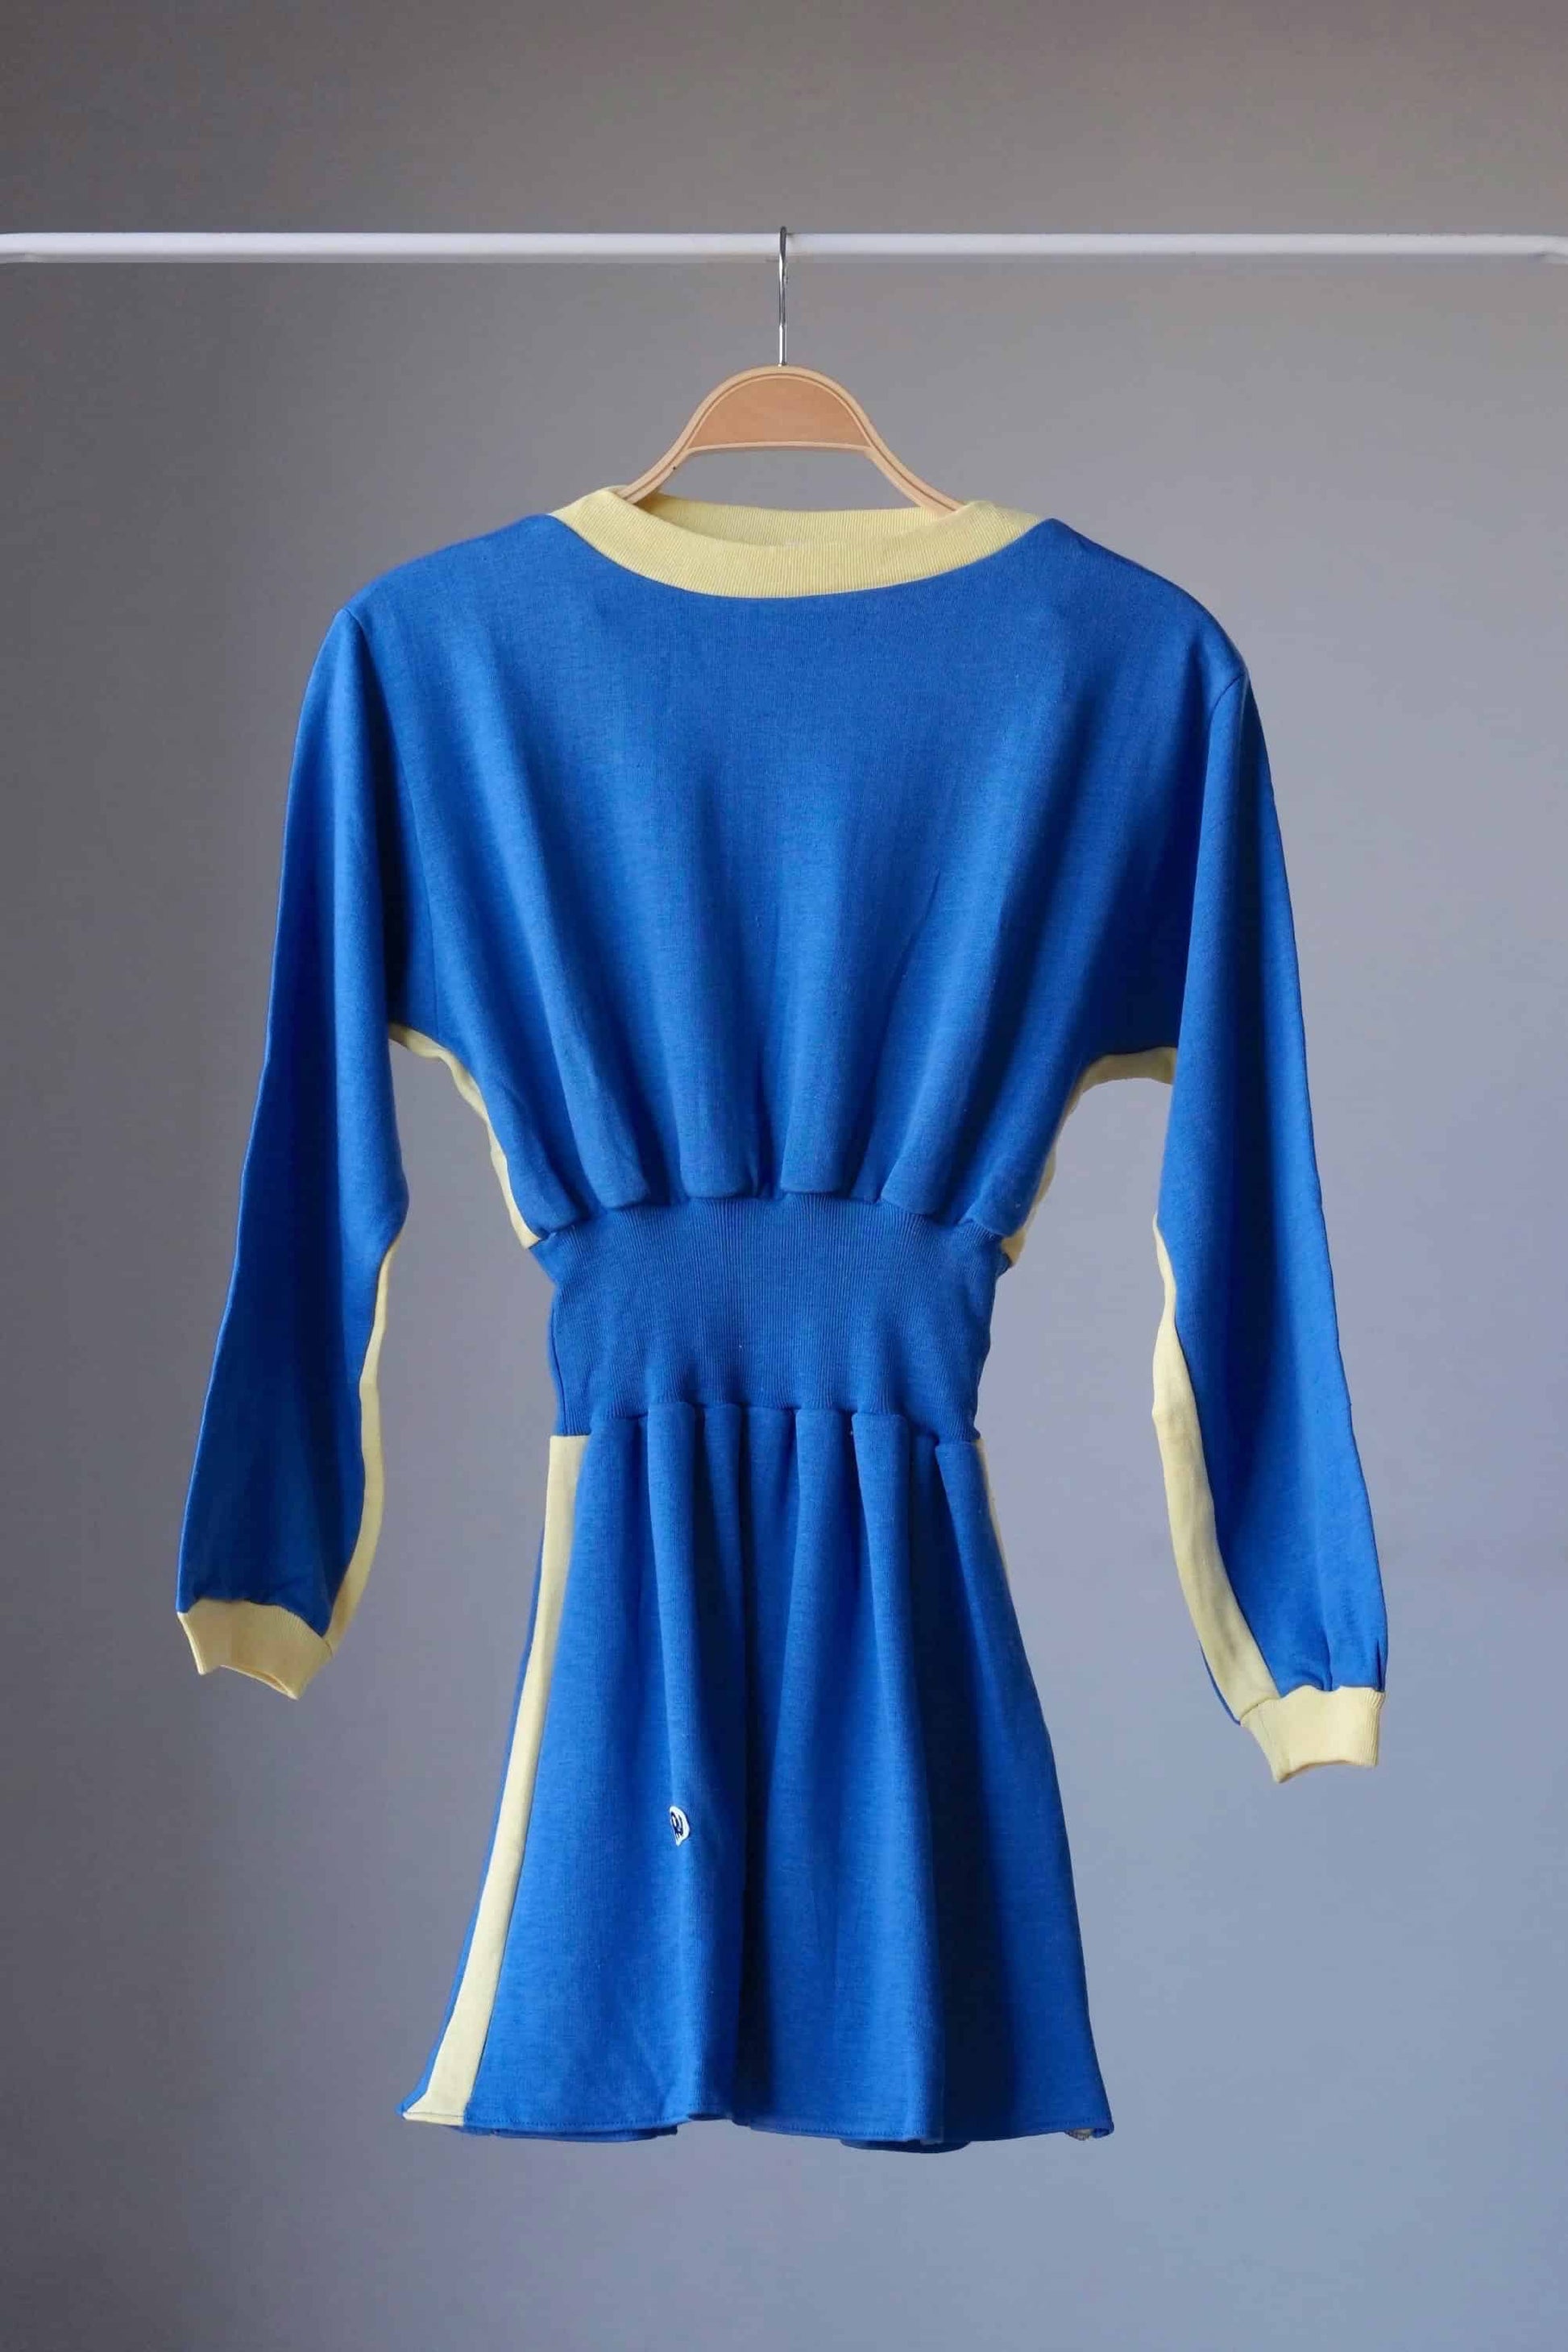  Vintage 80's Sweatshirt Dress blue